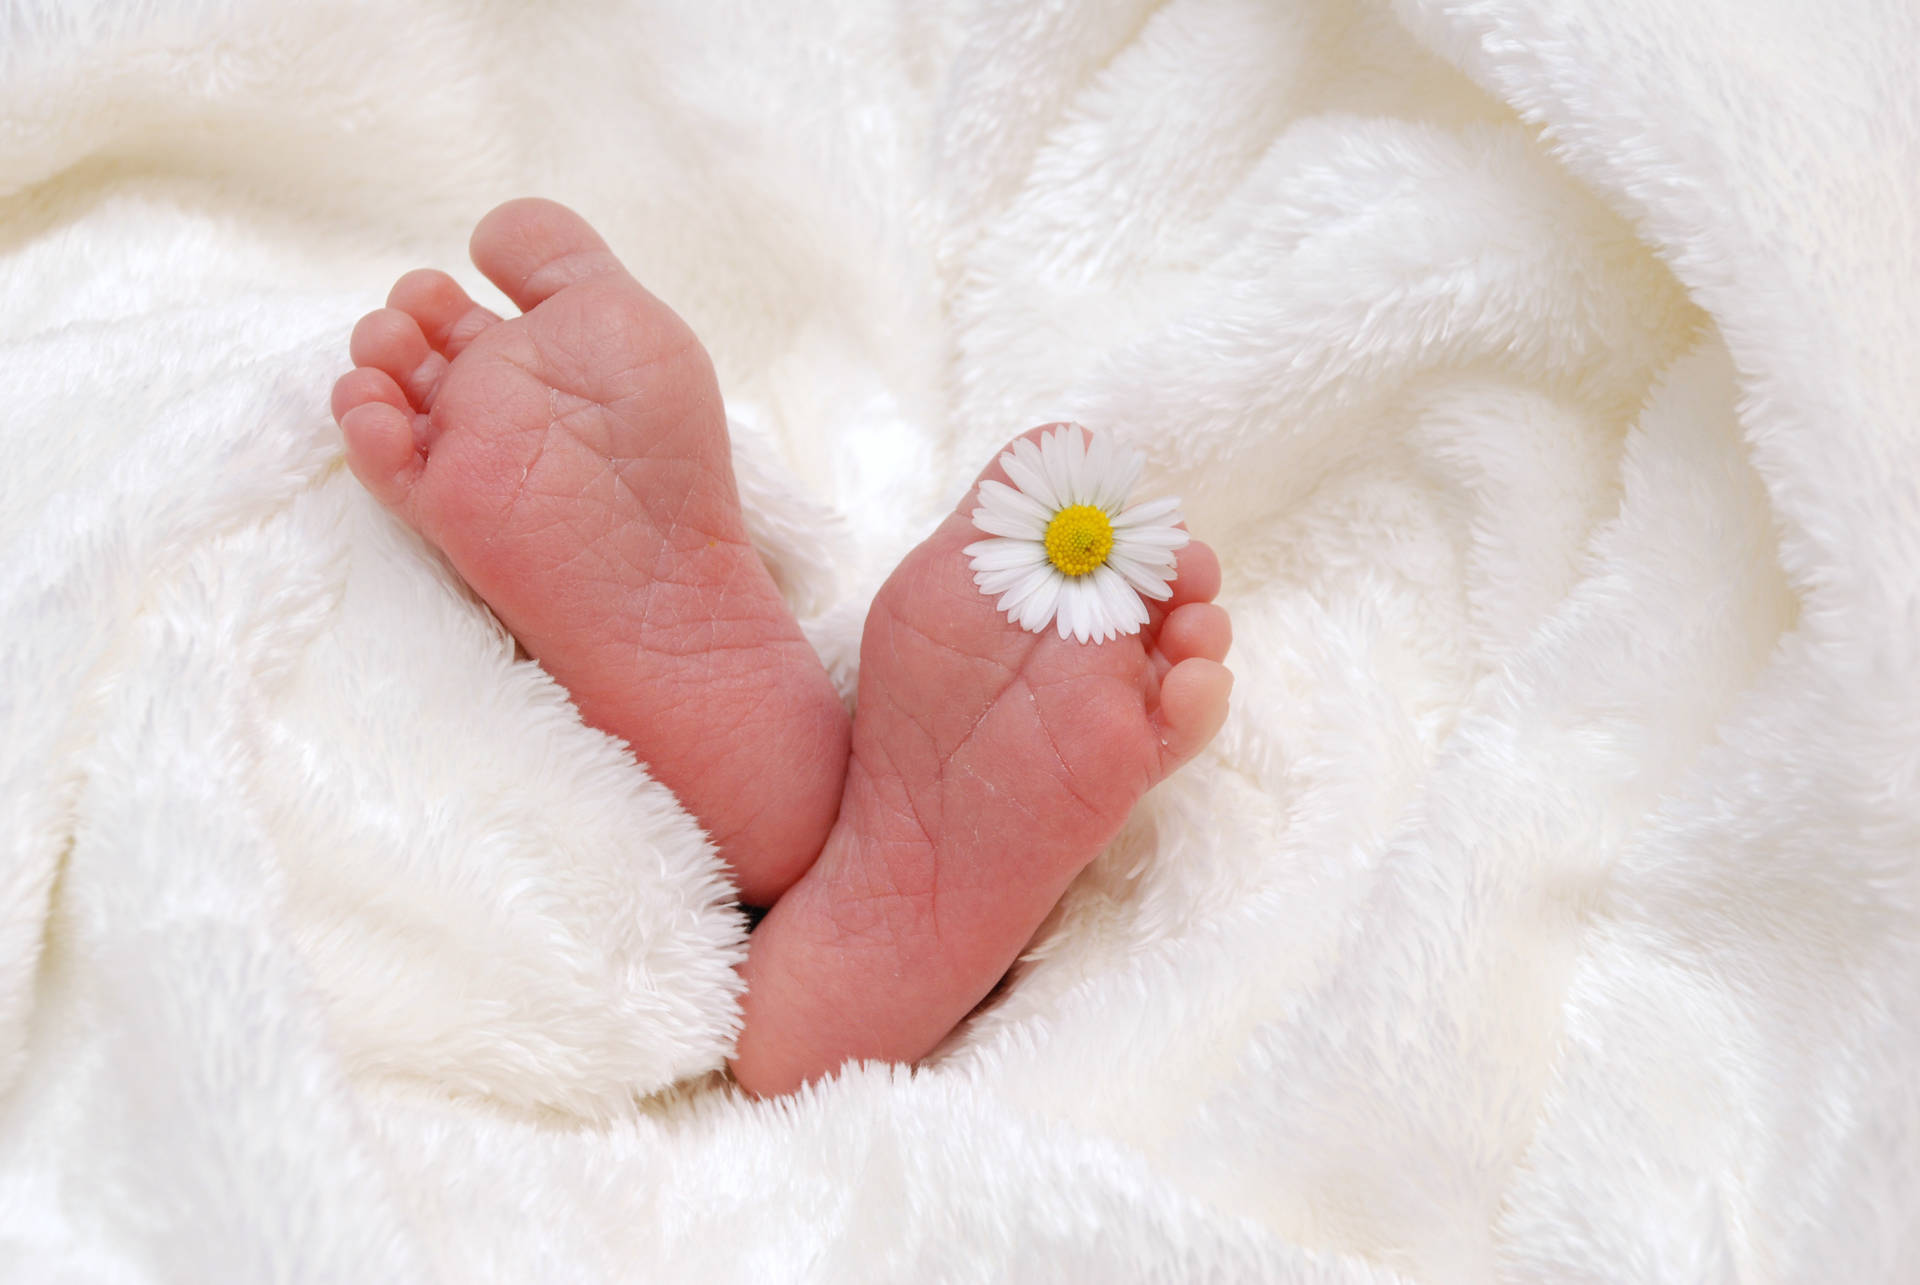 Very Cute Baby Feet Daisy Flower Background